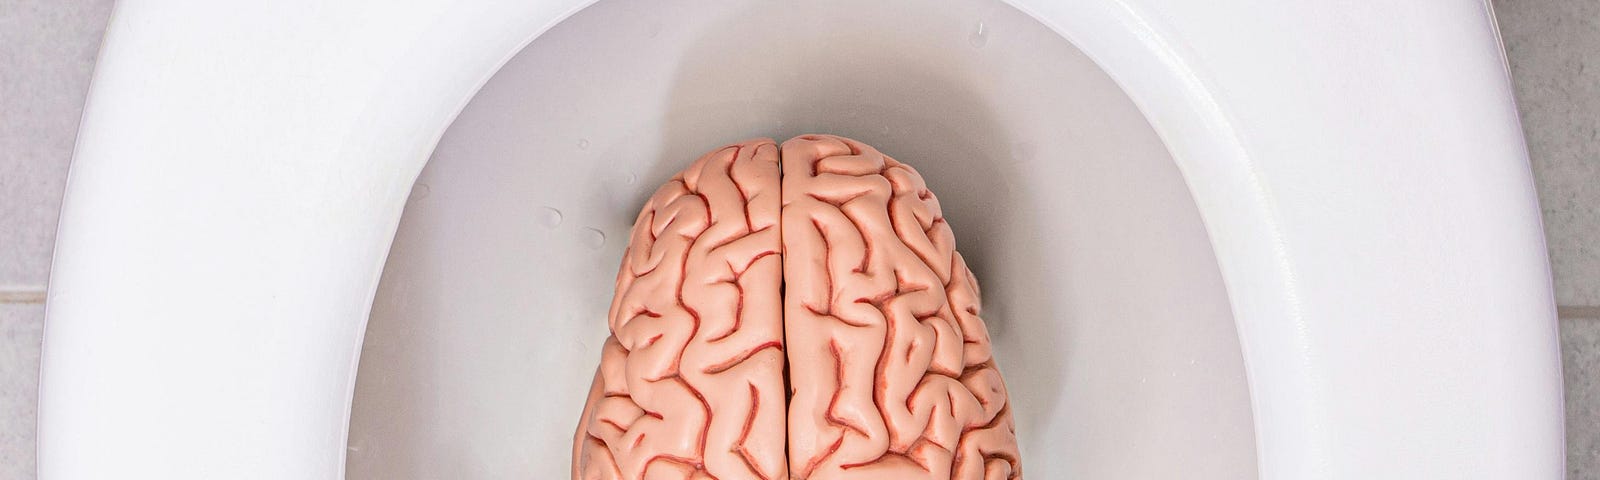 A brain sitting in a toilet bowl.